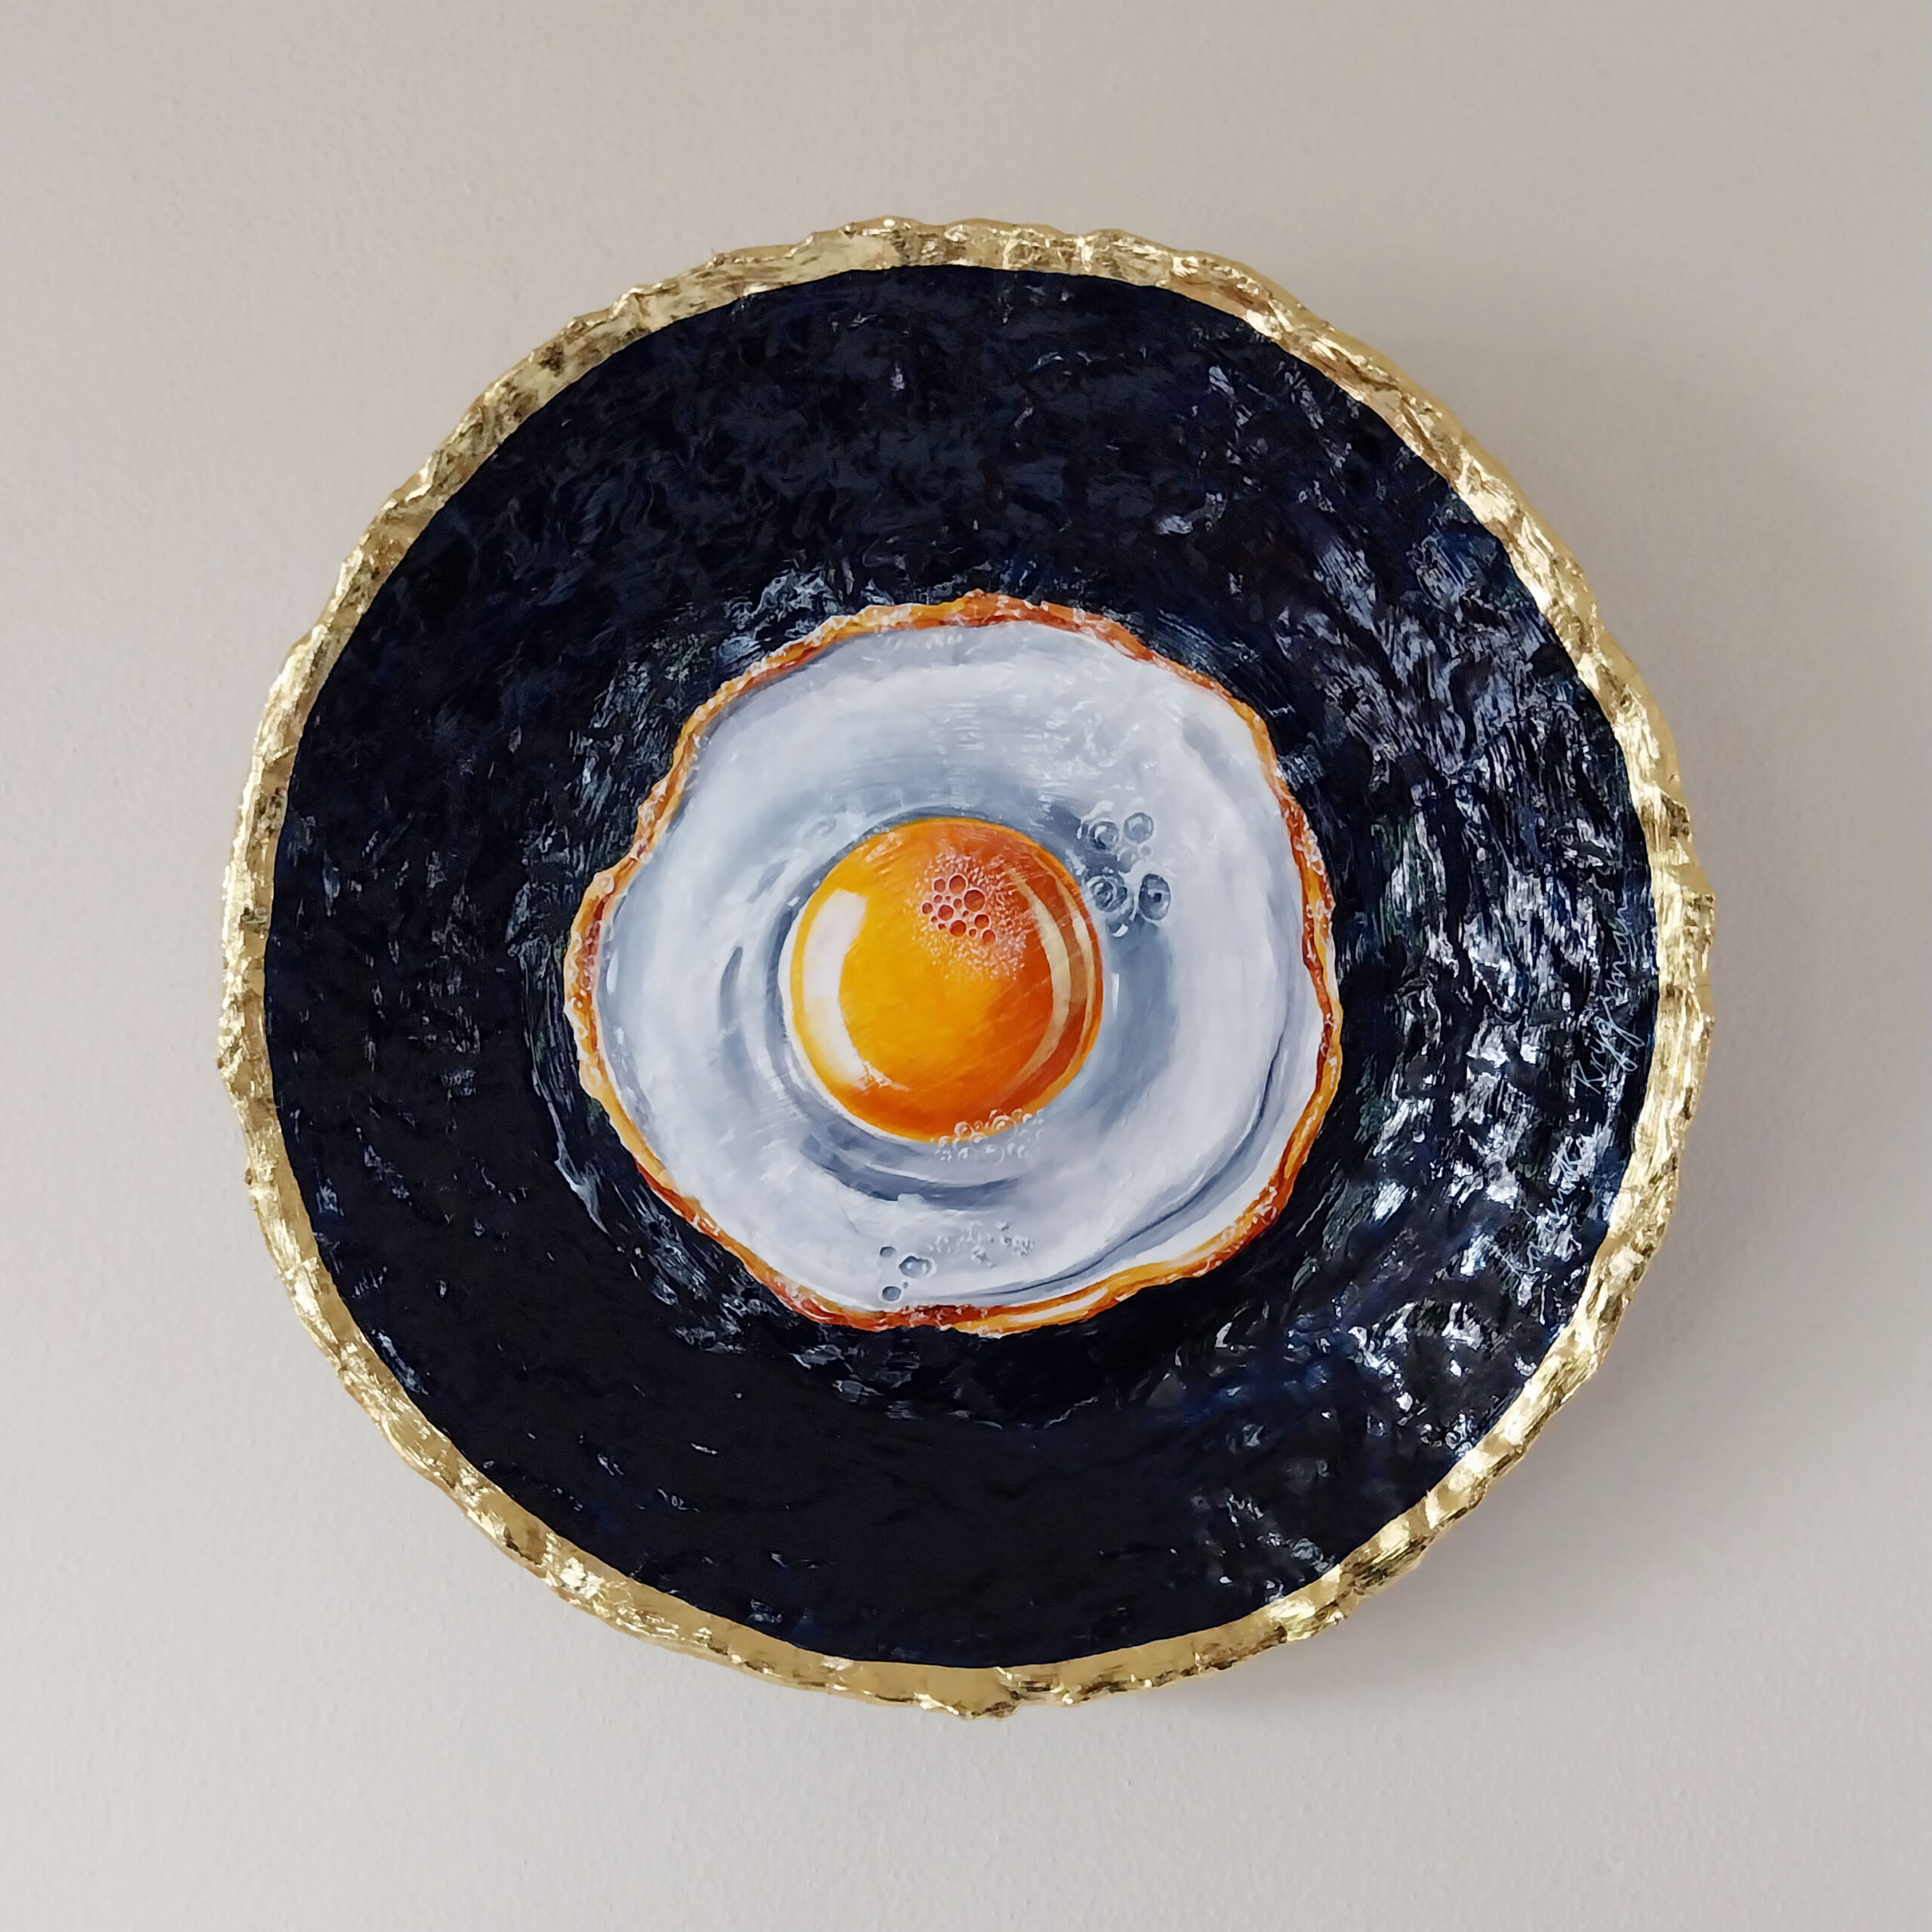 Kunst: gebakken ei diepblauw / oeuf frit blue profond van kunstenaar Katinka Krijgsman